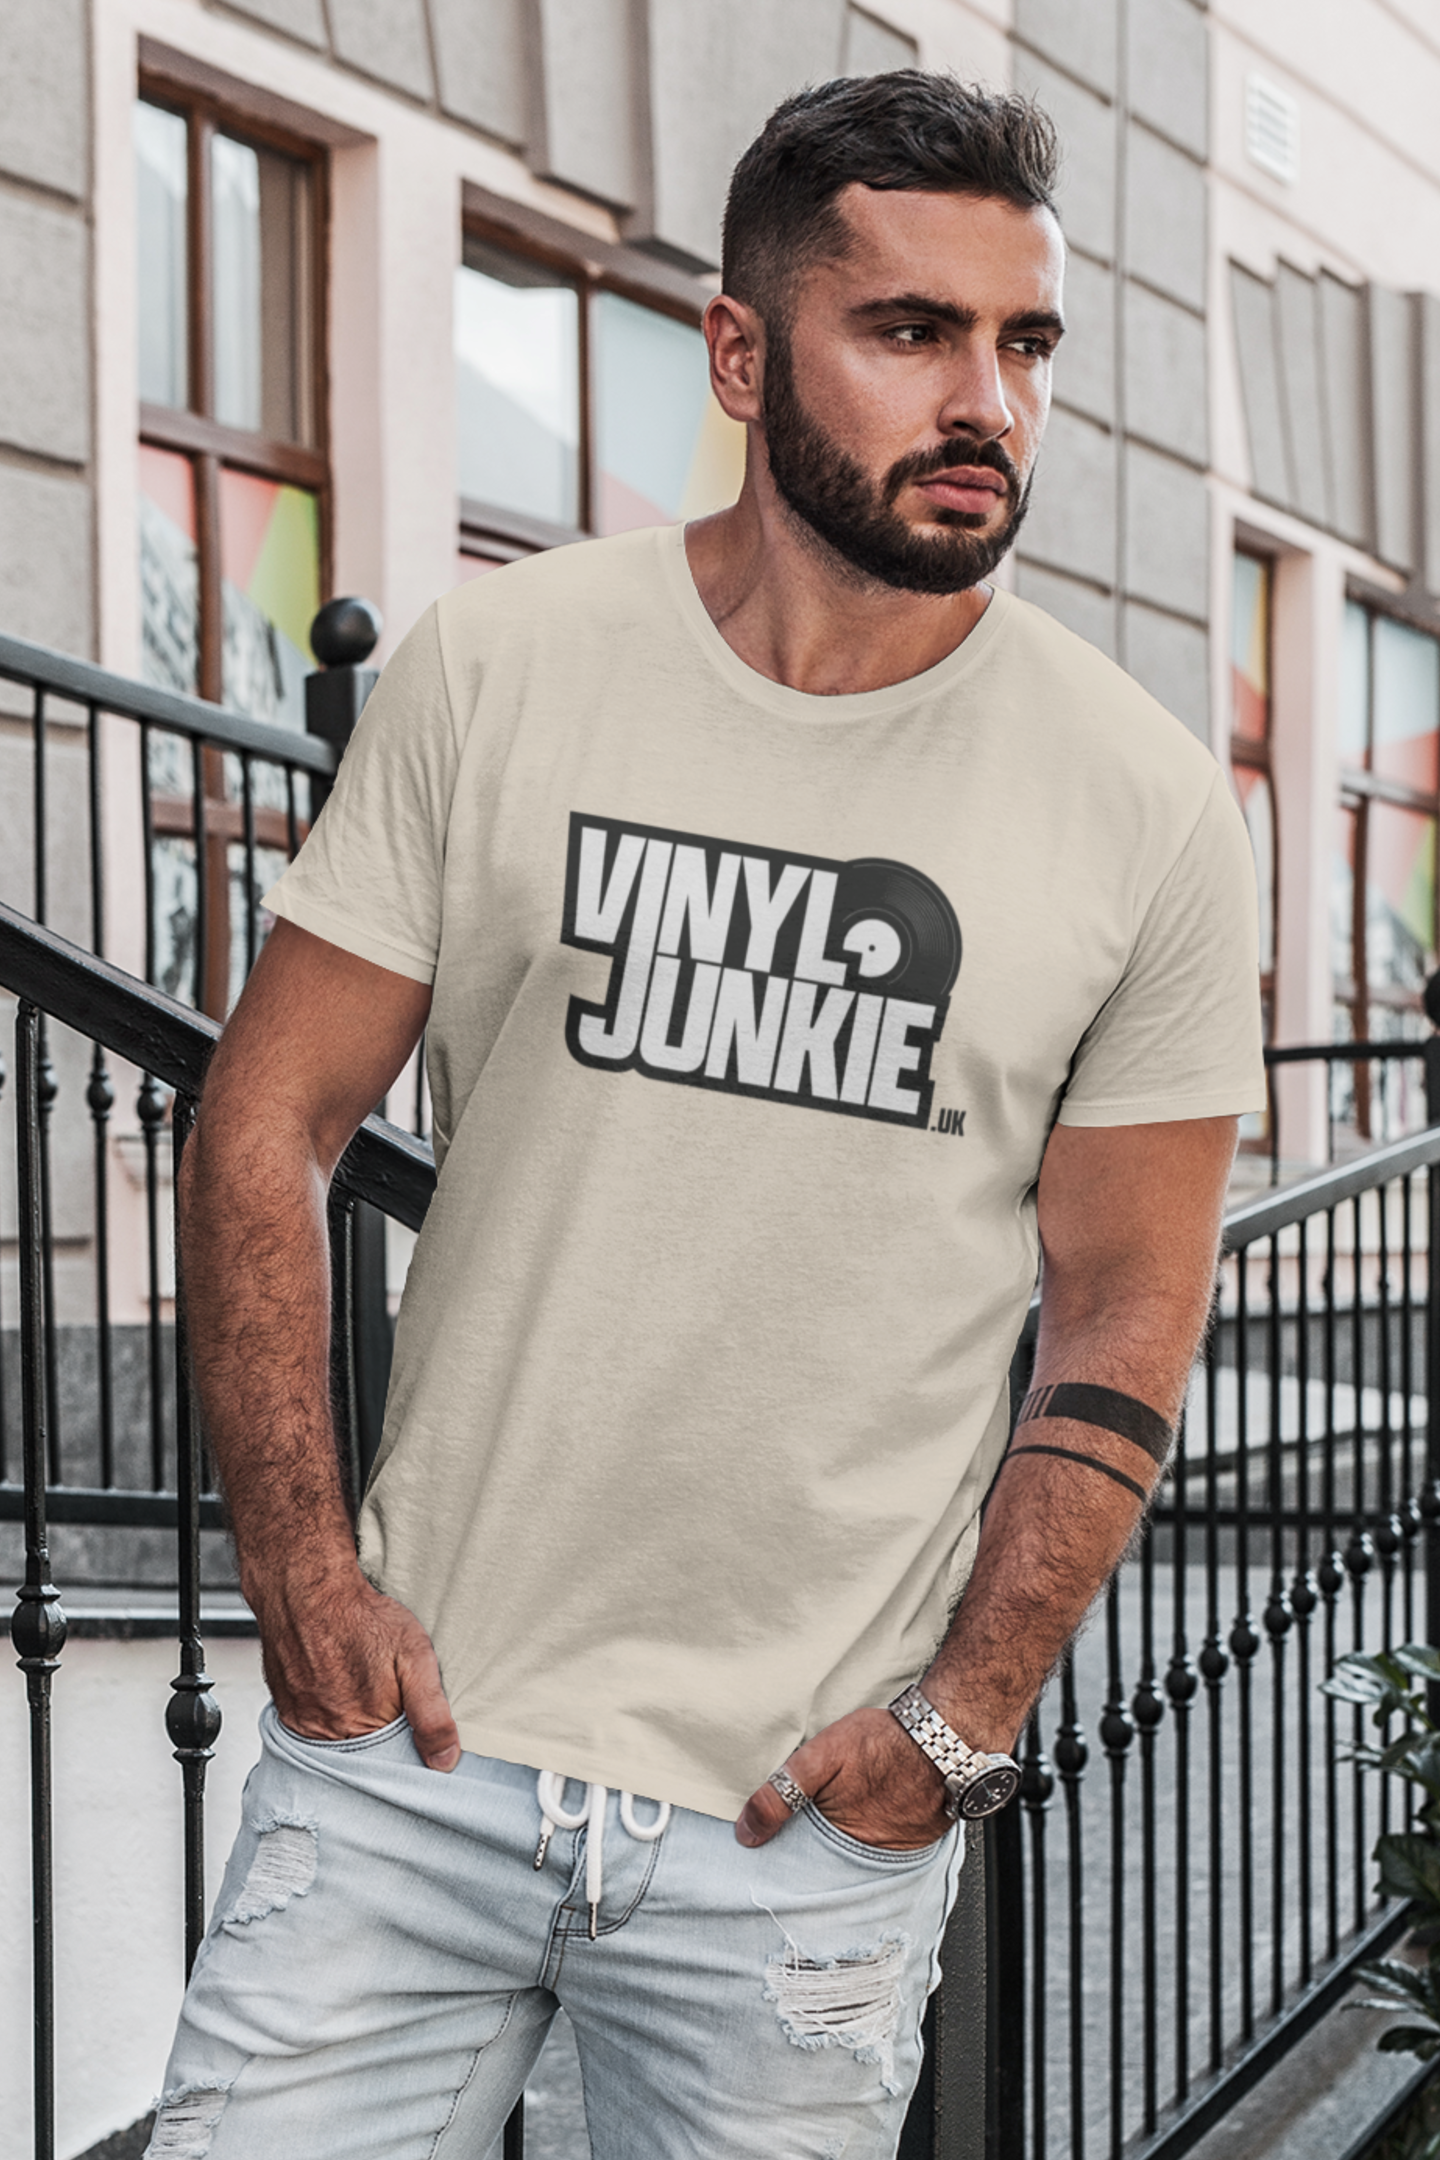 Vinyl Junkie UK - Short Sleeve Unisex T-Shirt - Vinyl Junkie UK